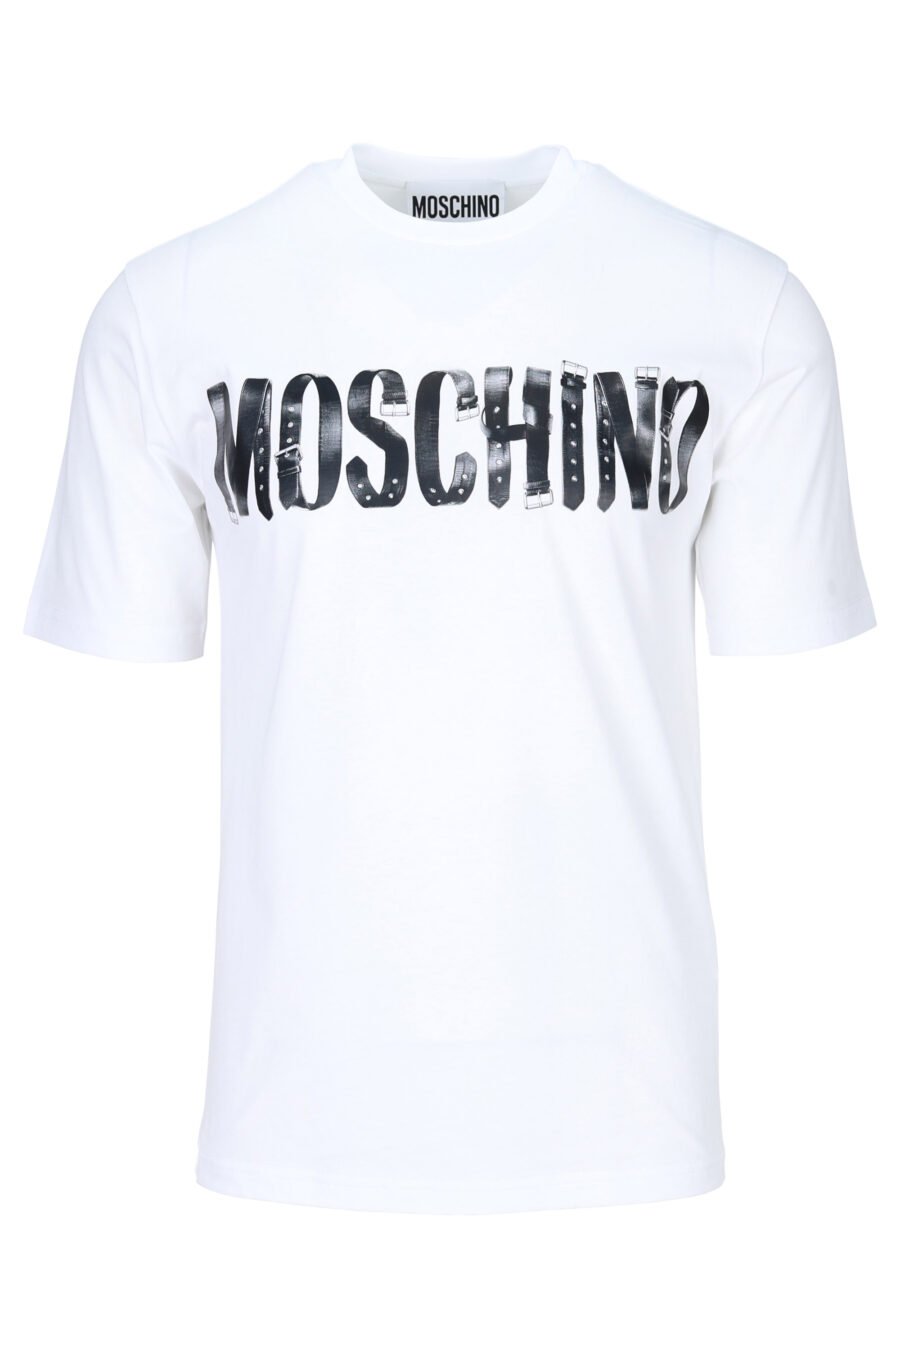 White T-shirt with black worn maxilogue - 889316937954